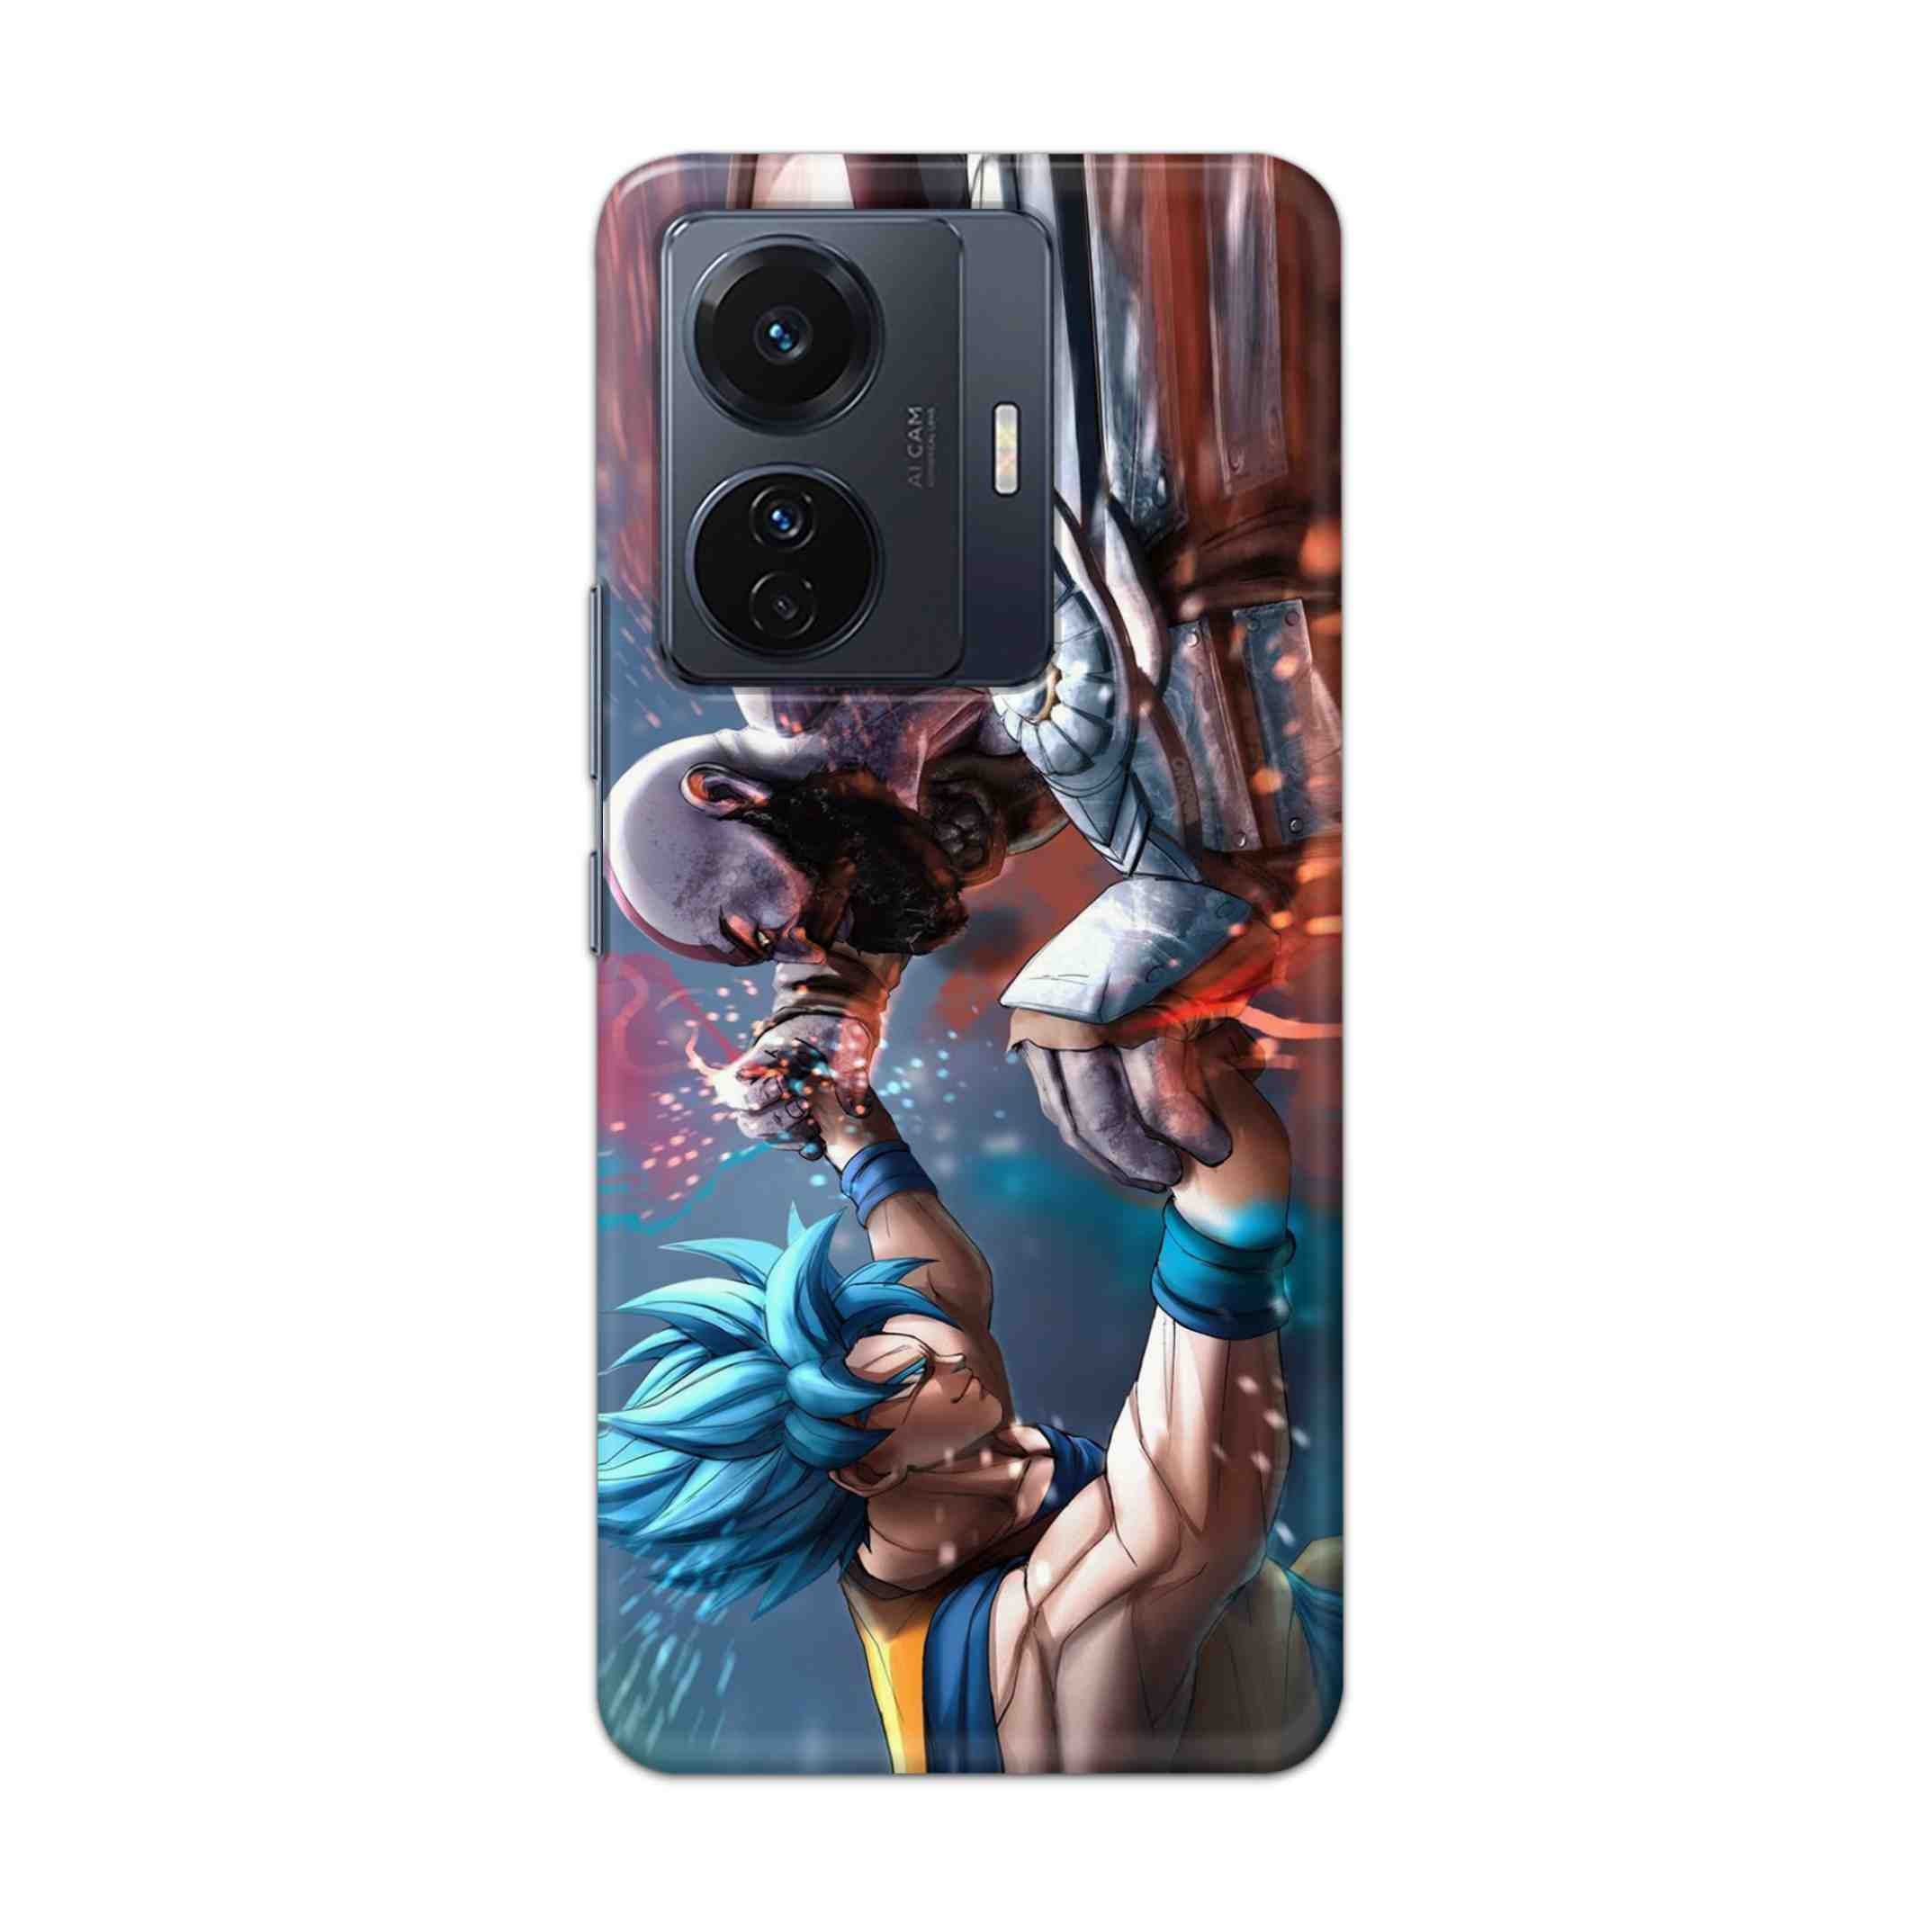 Buy Goku Vs Kratos Hard Back Mobile Phone Case Cover For Vivo T1 Pro 5G Online